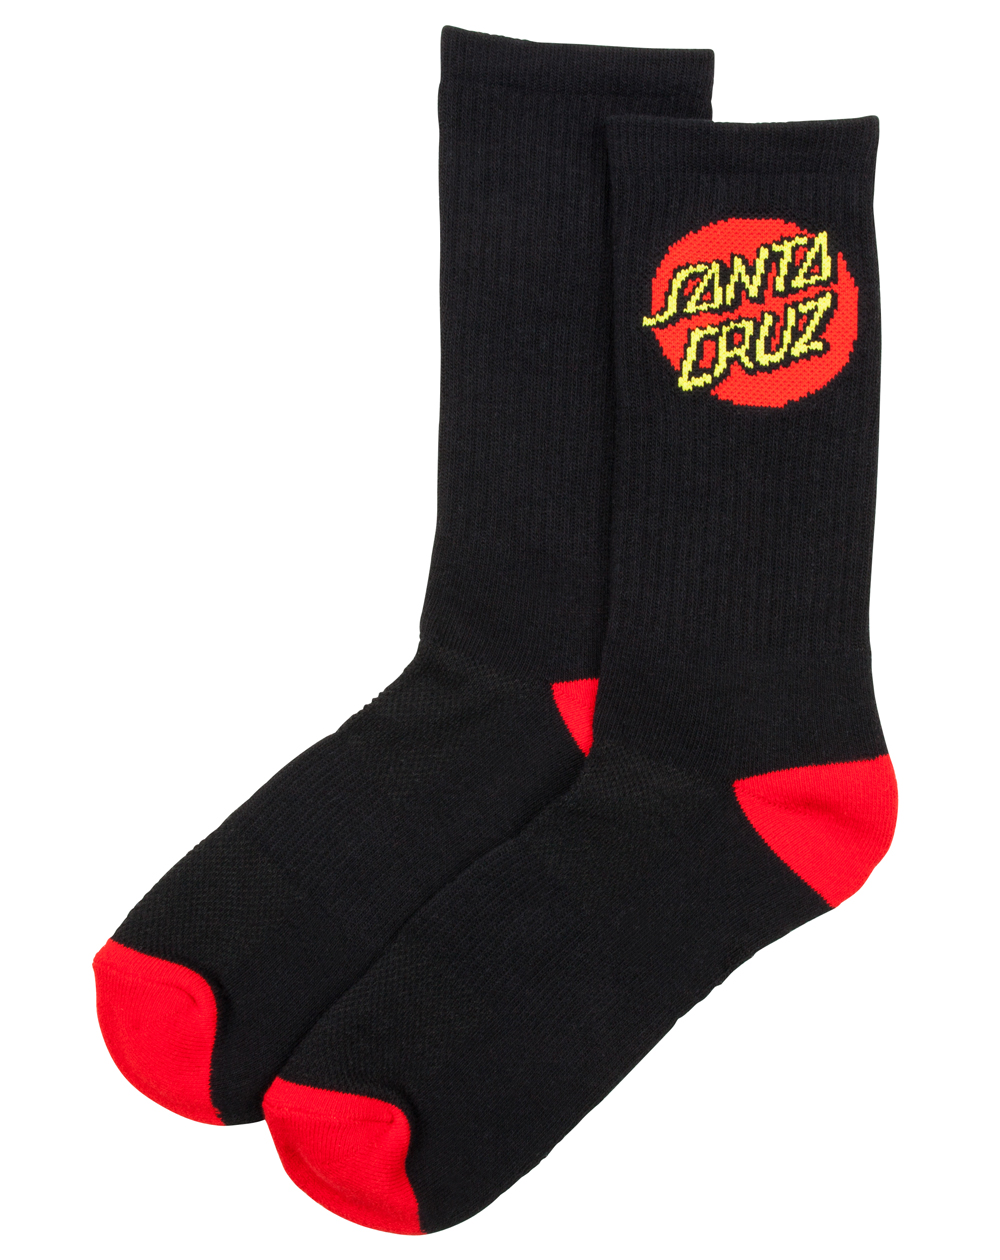 Santa Cruz Men's Socks Classic Dot Black/White pack of 2